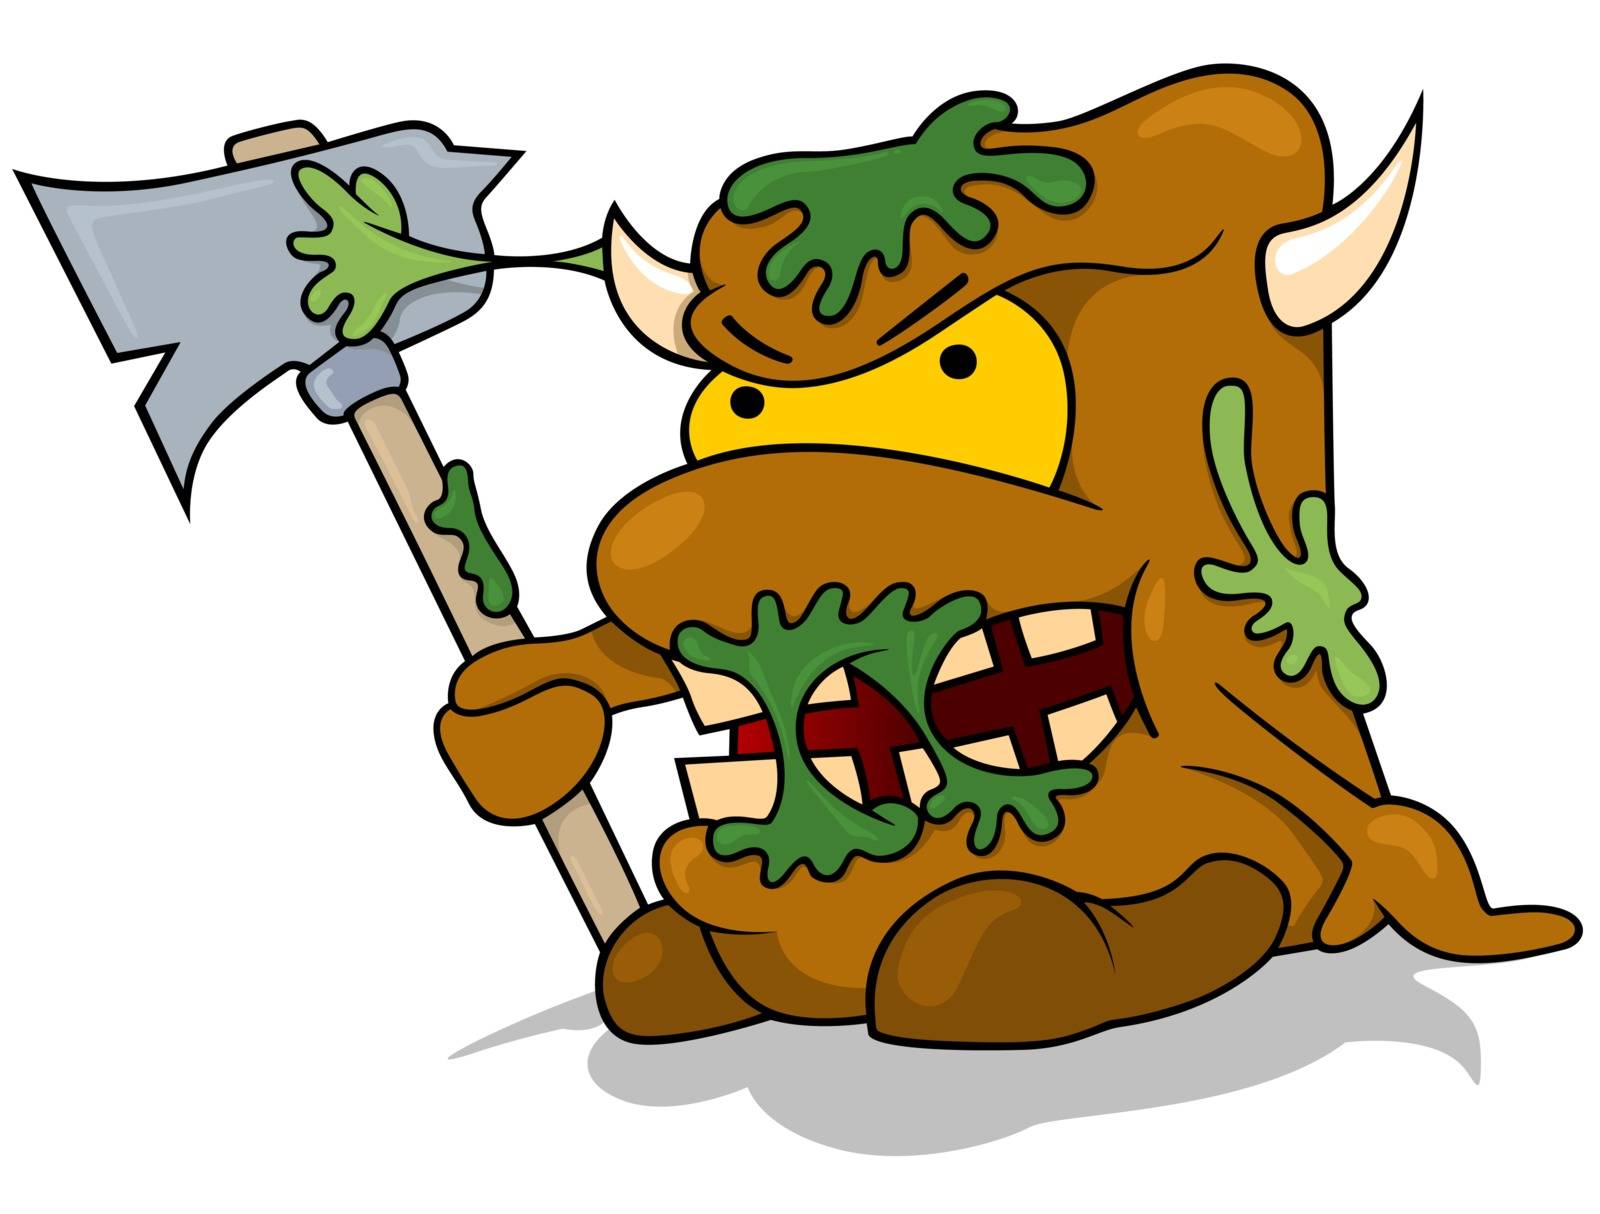 Garbage Monster by illustratorCZ